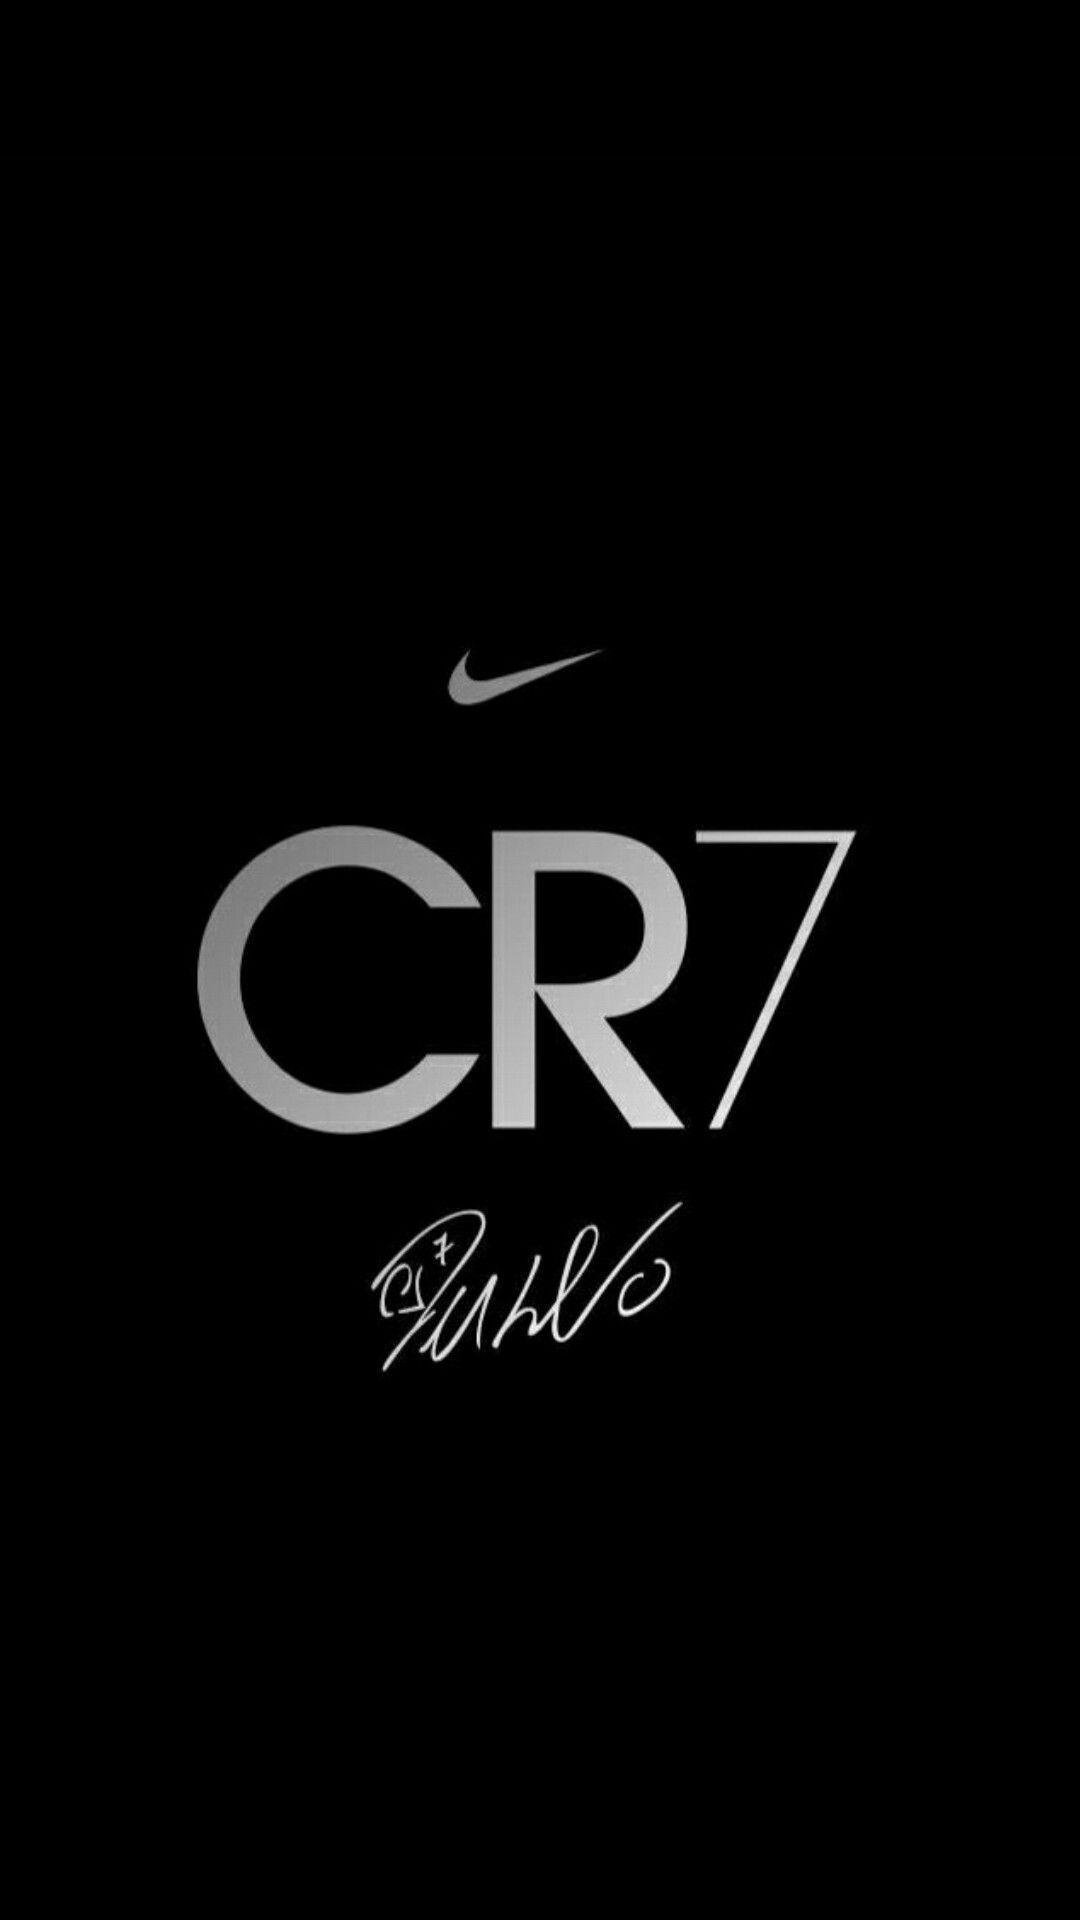 Aesthetic CR7 Logo